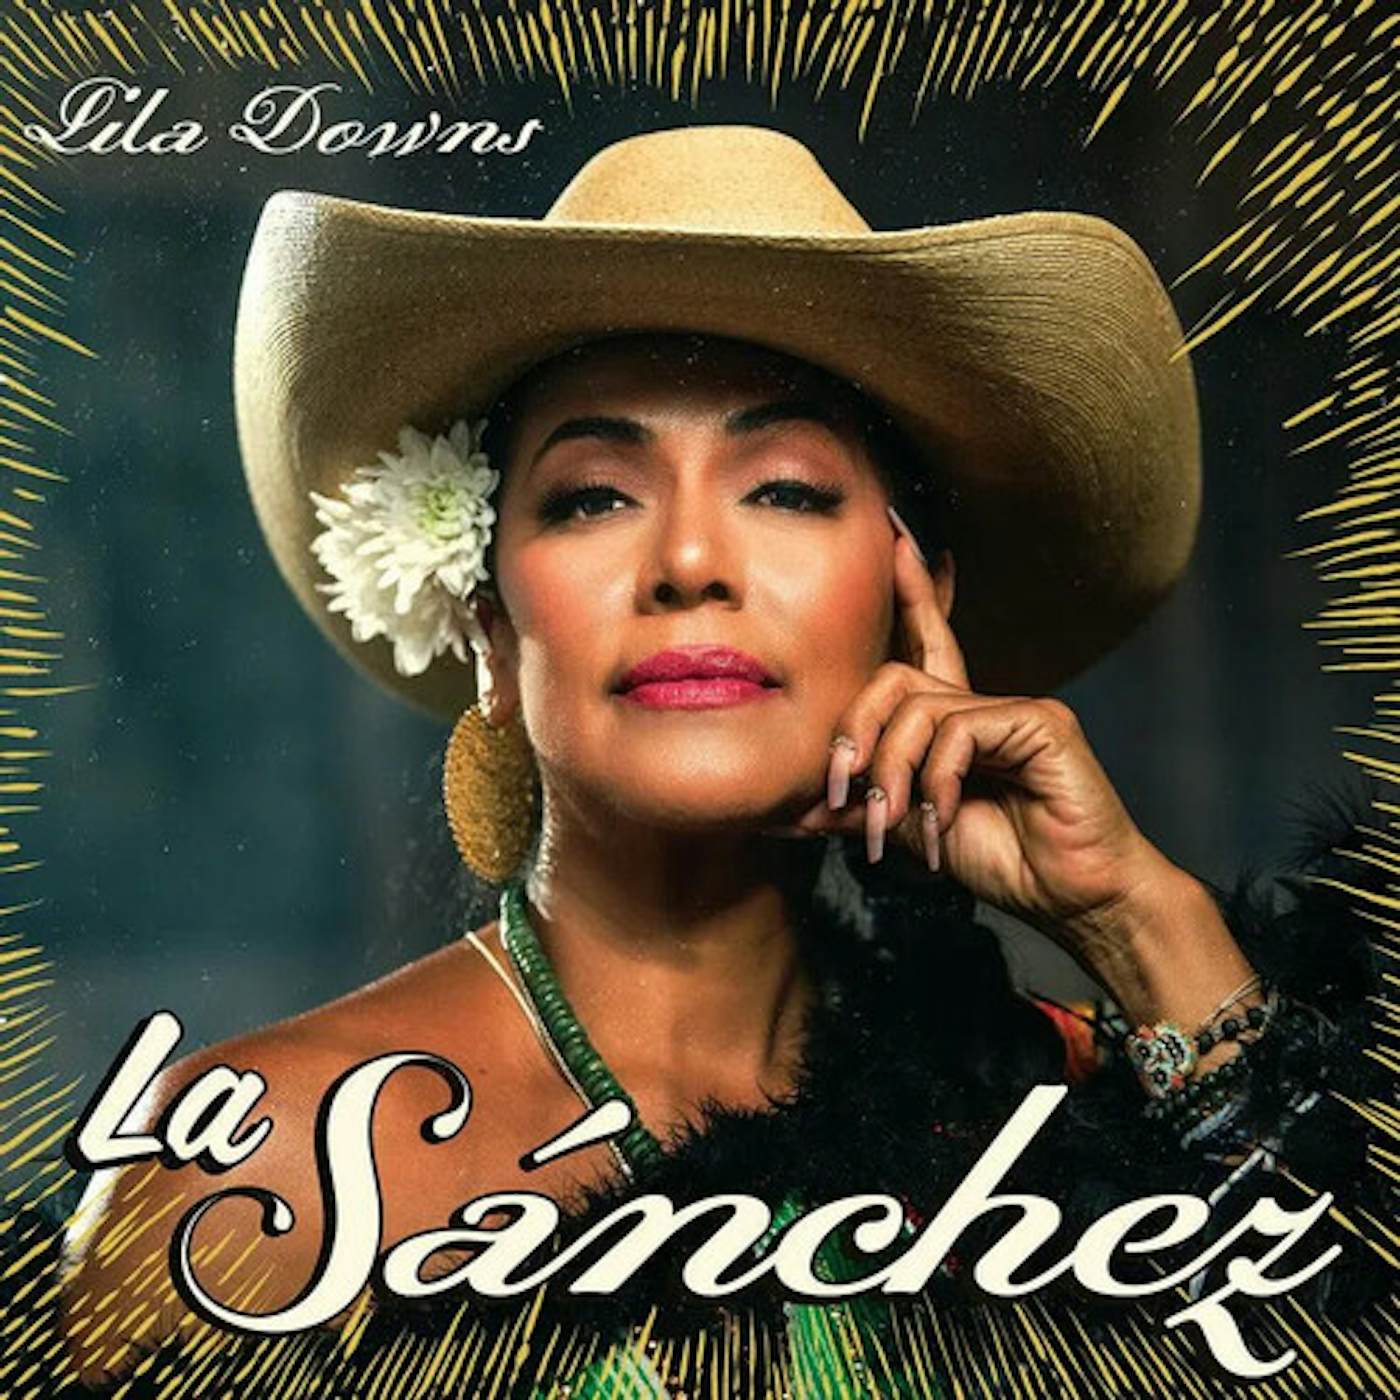 Lila Downs LA SANCHEZ CD